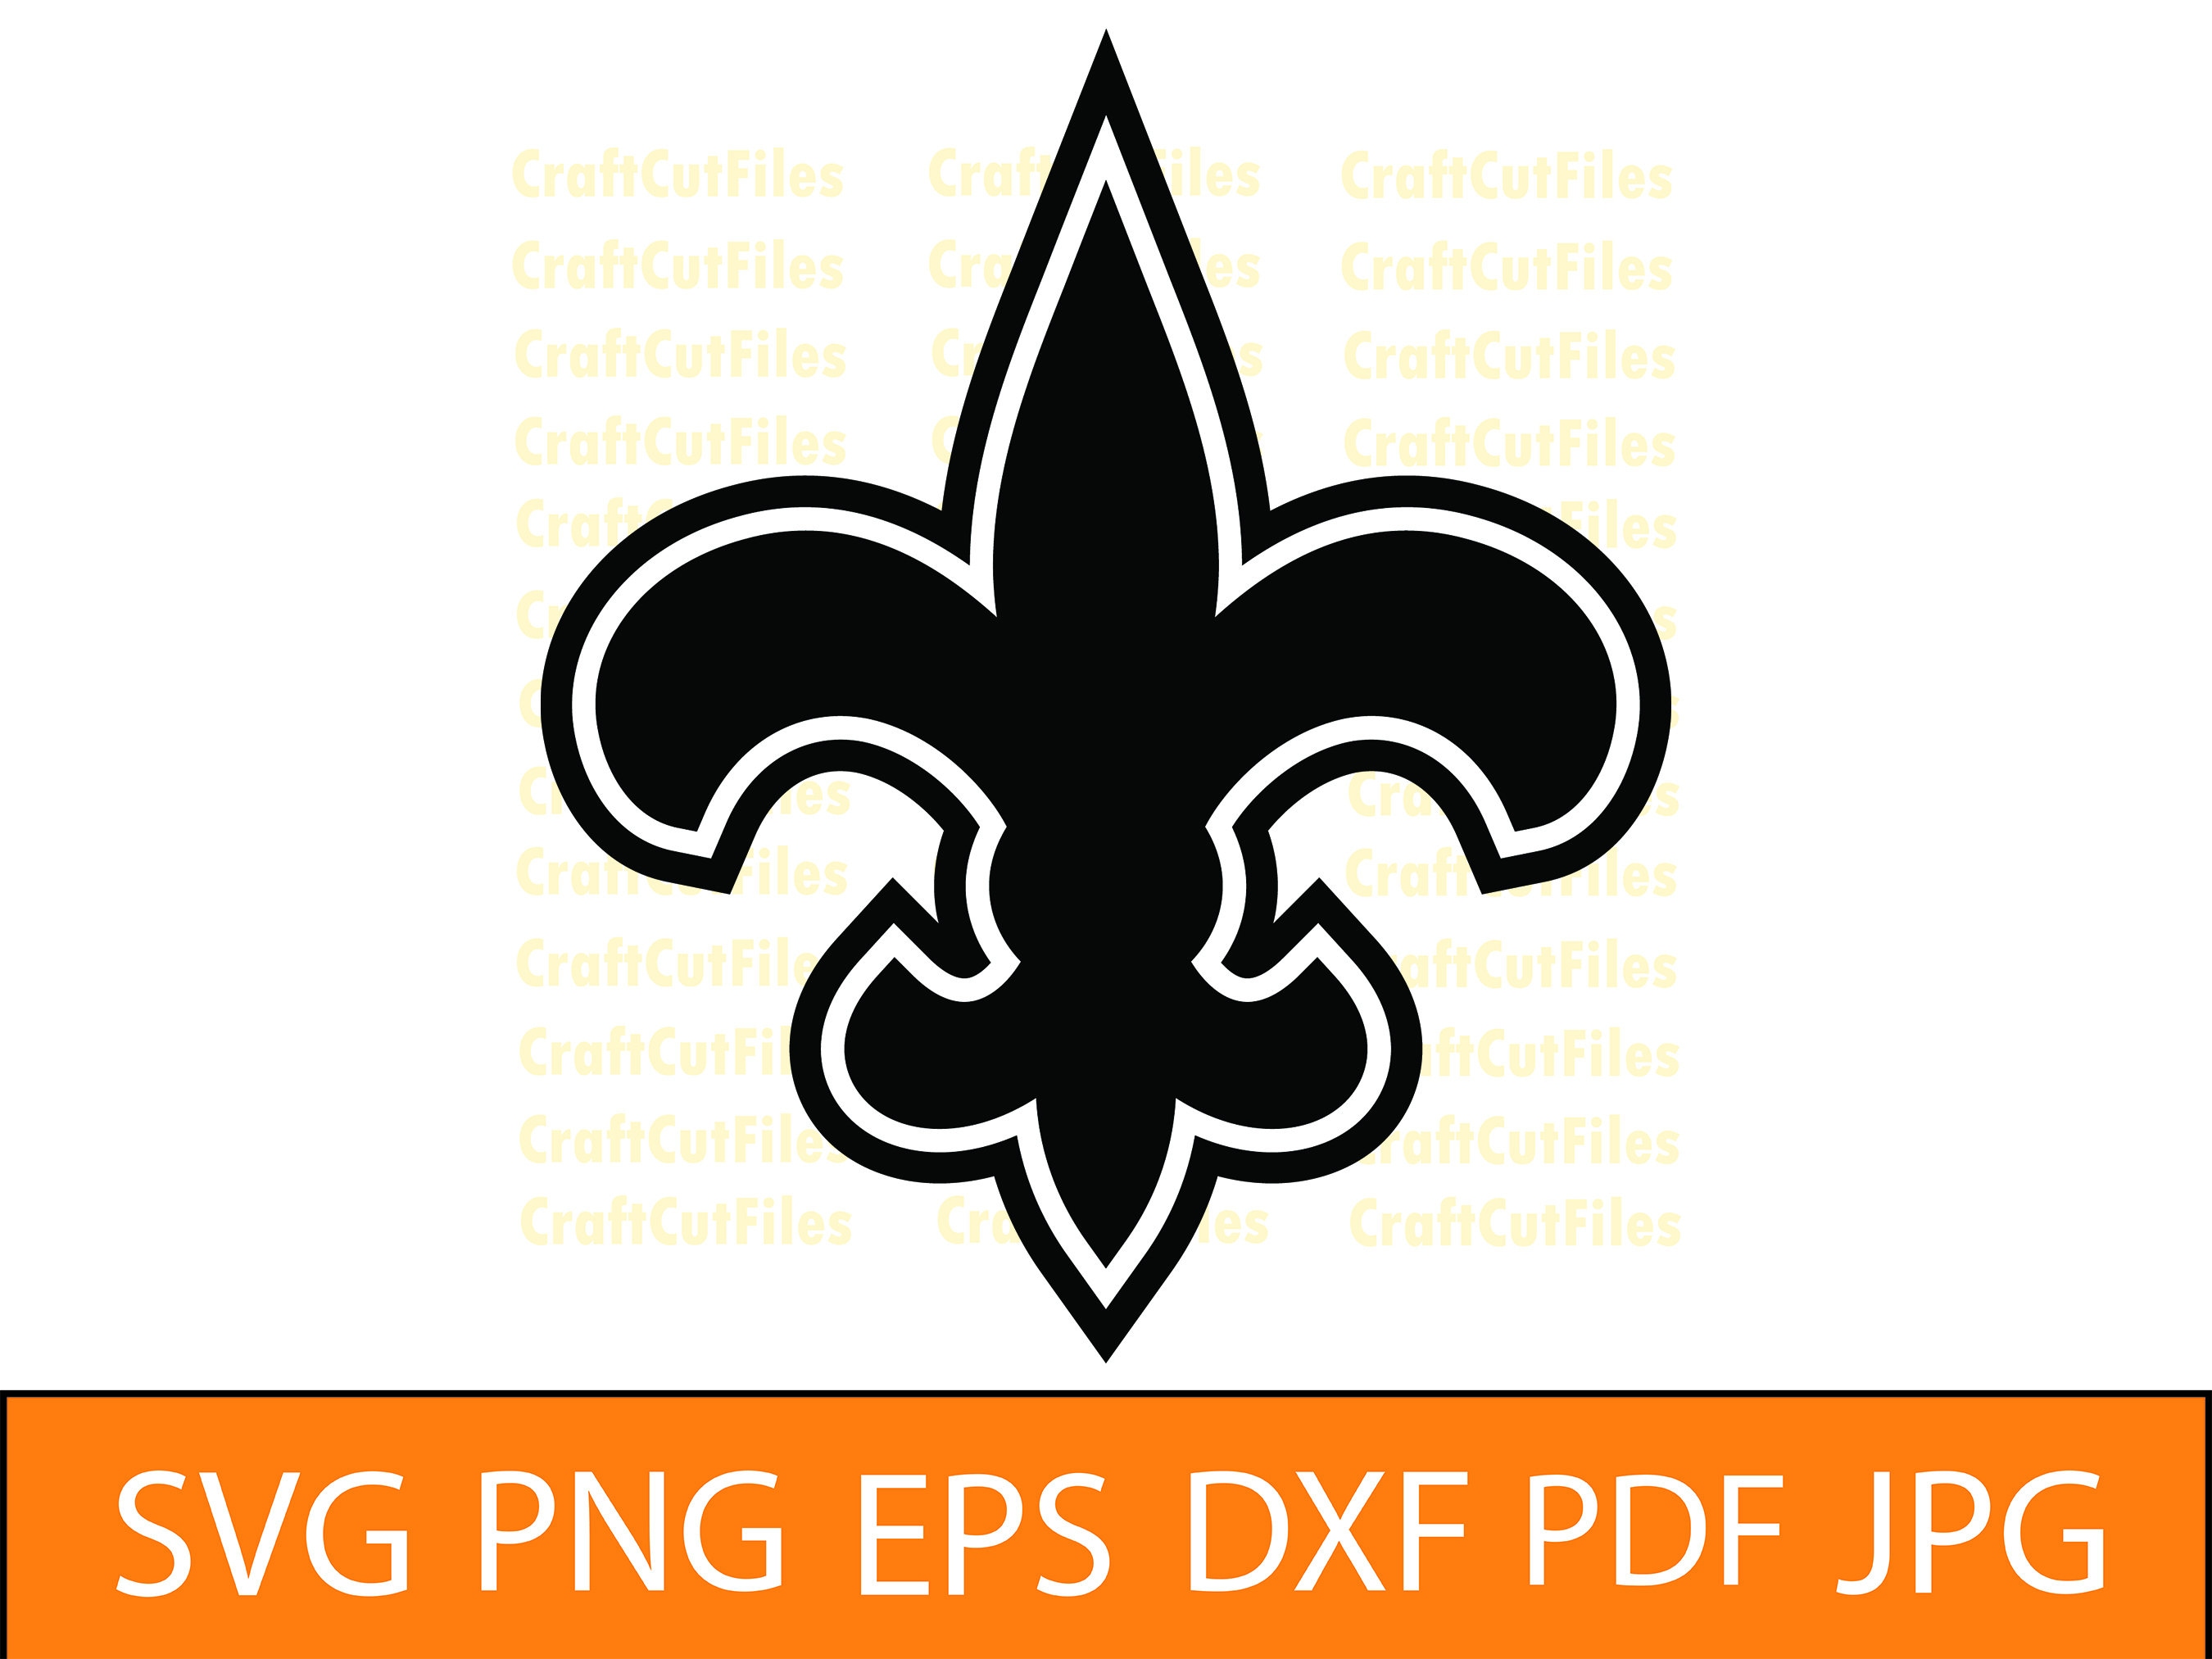 New Orleans Saints Nfl Lips, Svg Png Dxf Eps - free svg files for cricut